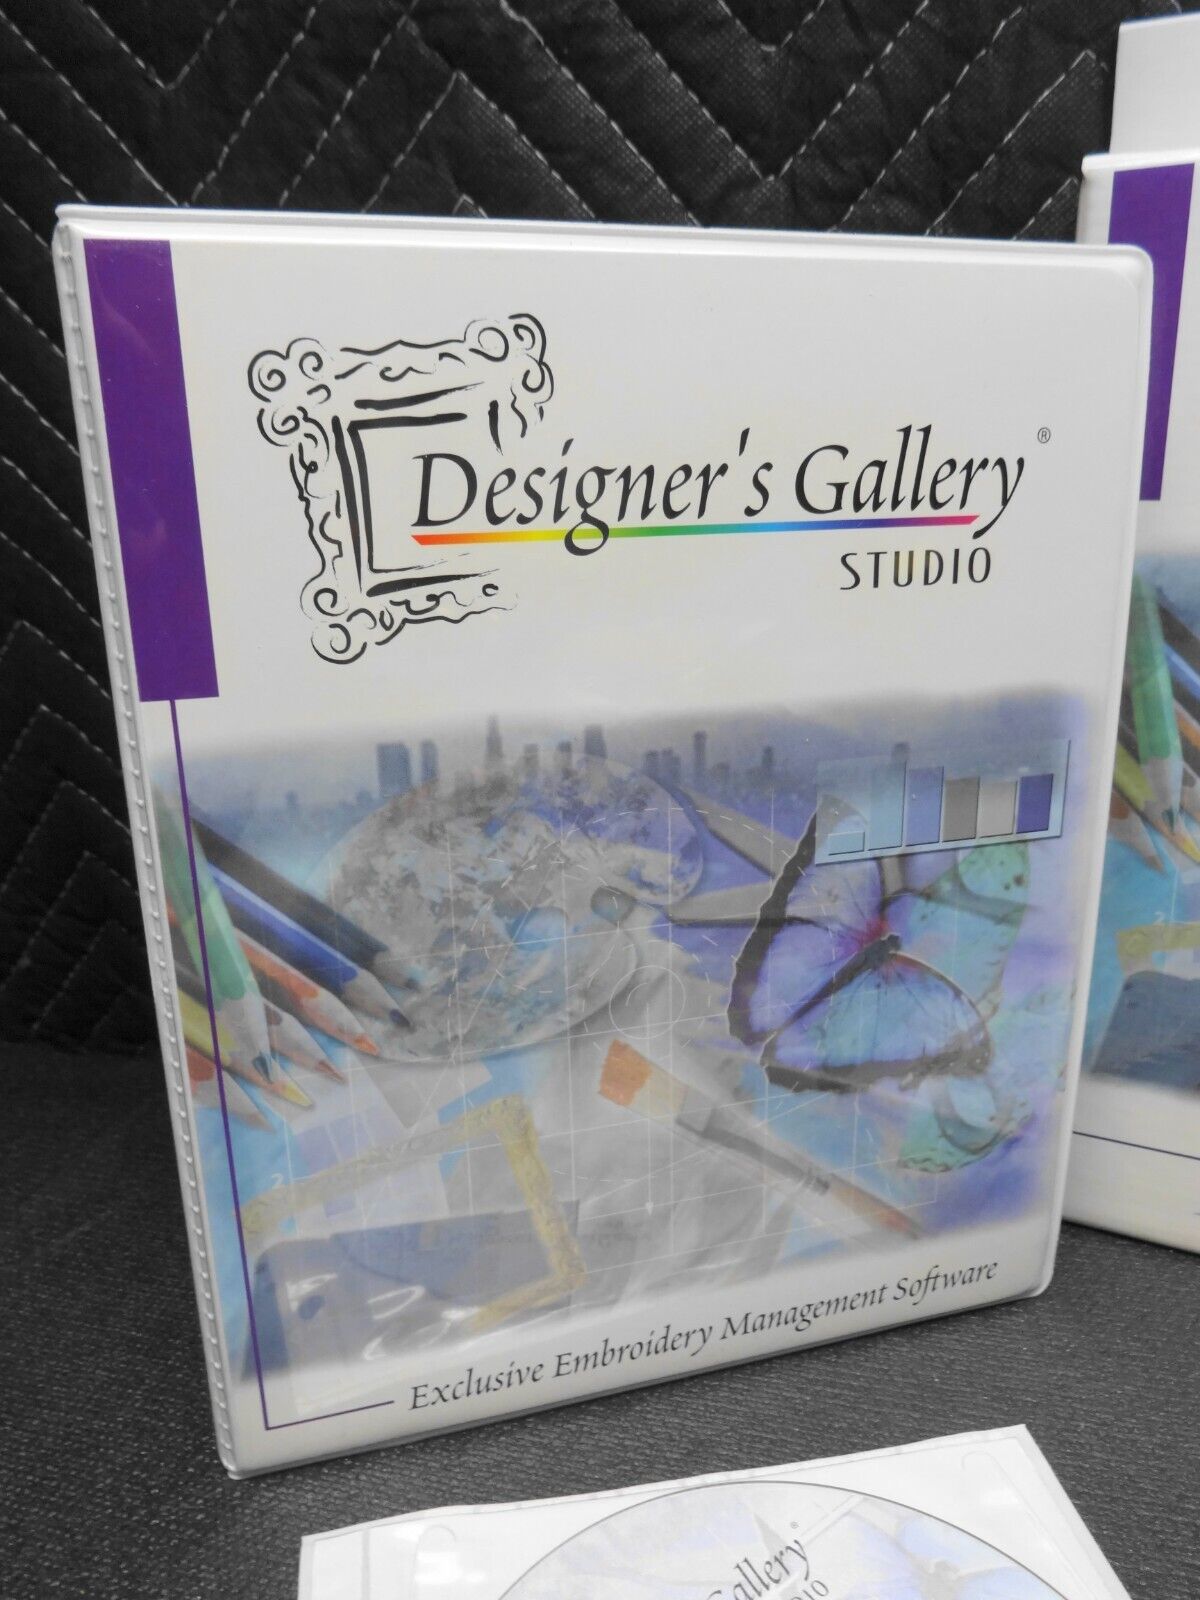 Designer's Gallery Studio Embroidery Management Software